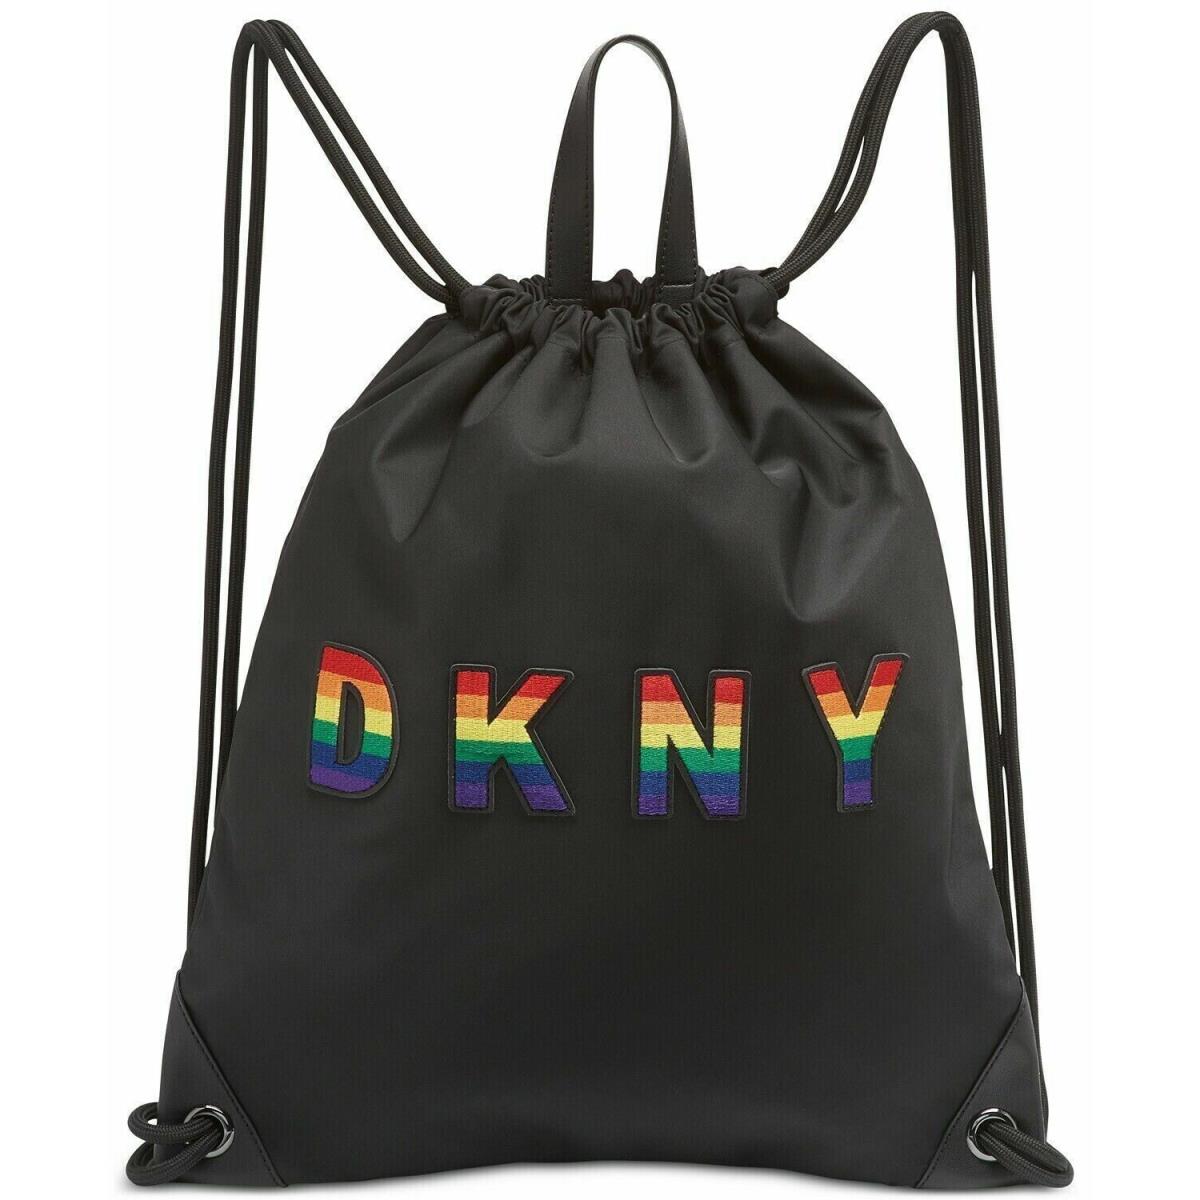 Dkny Pride Embossed Logo Drawstring Backpack Bag Crossbody Black - Handle/Strap: Black, Exterior: Black, Lining: Black